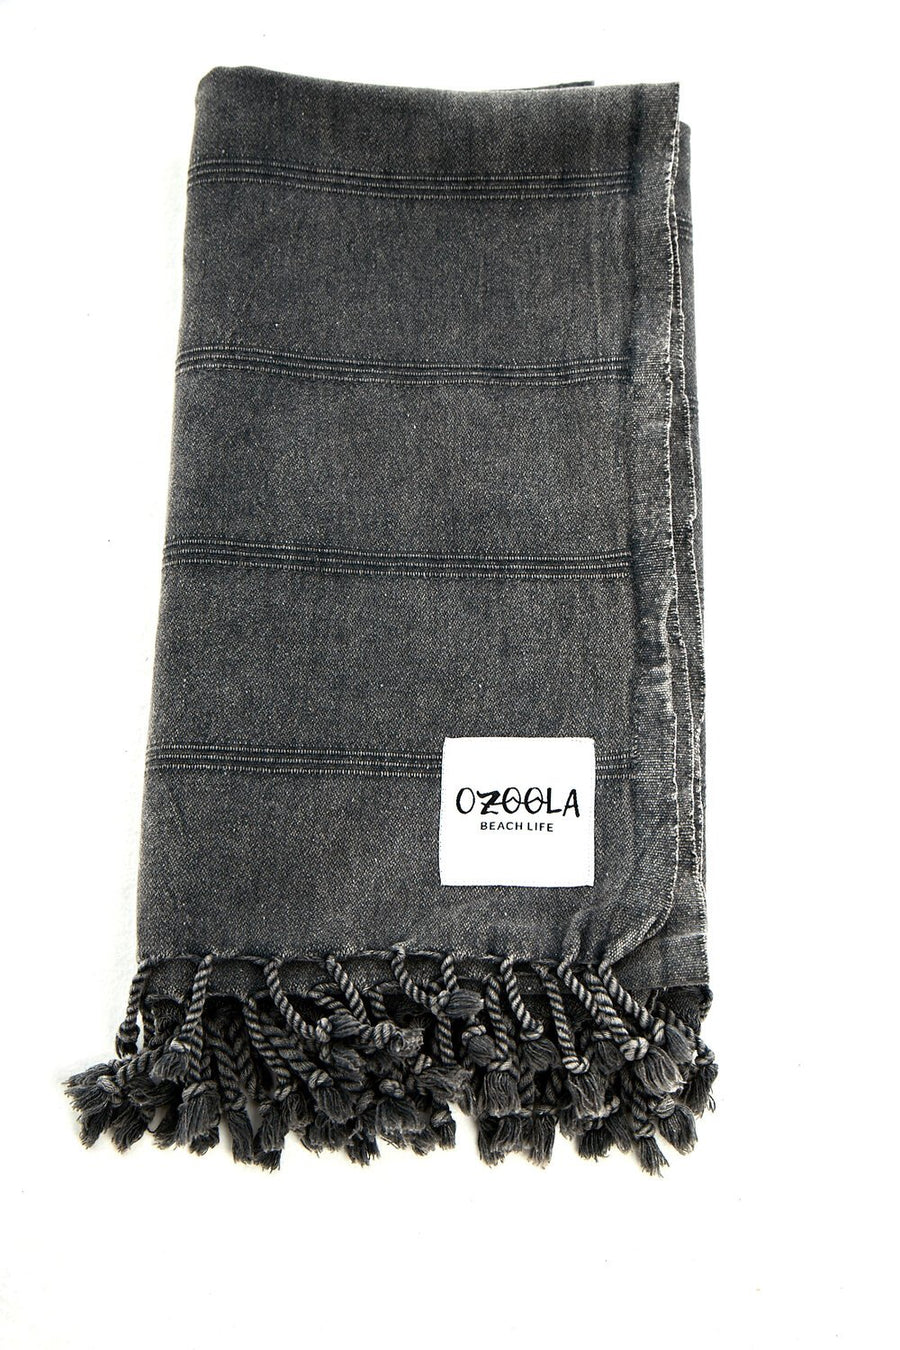 Ozoola Turkish beach towel in charcoal stonewash folded